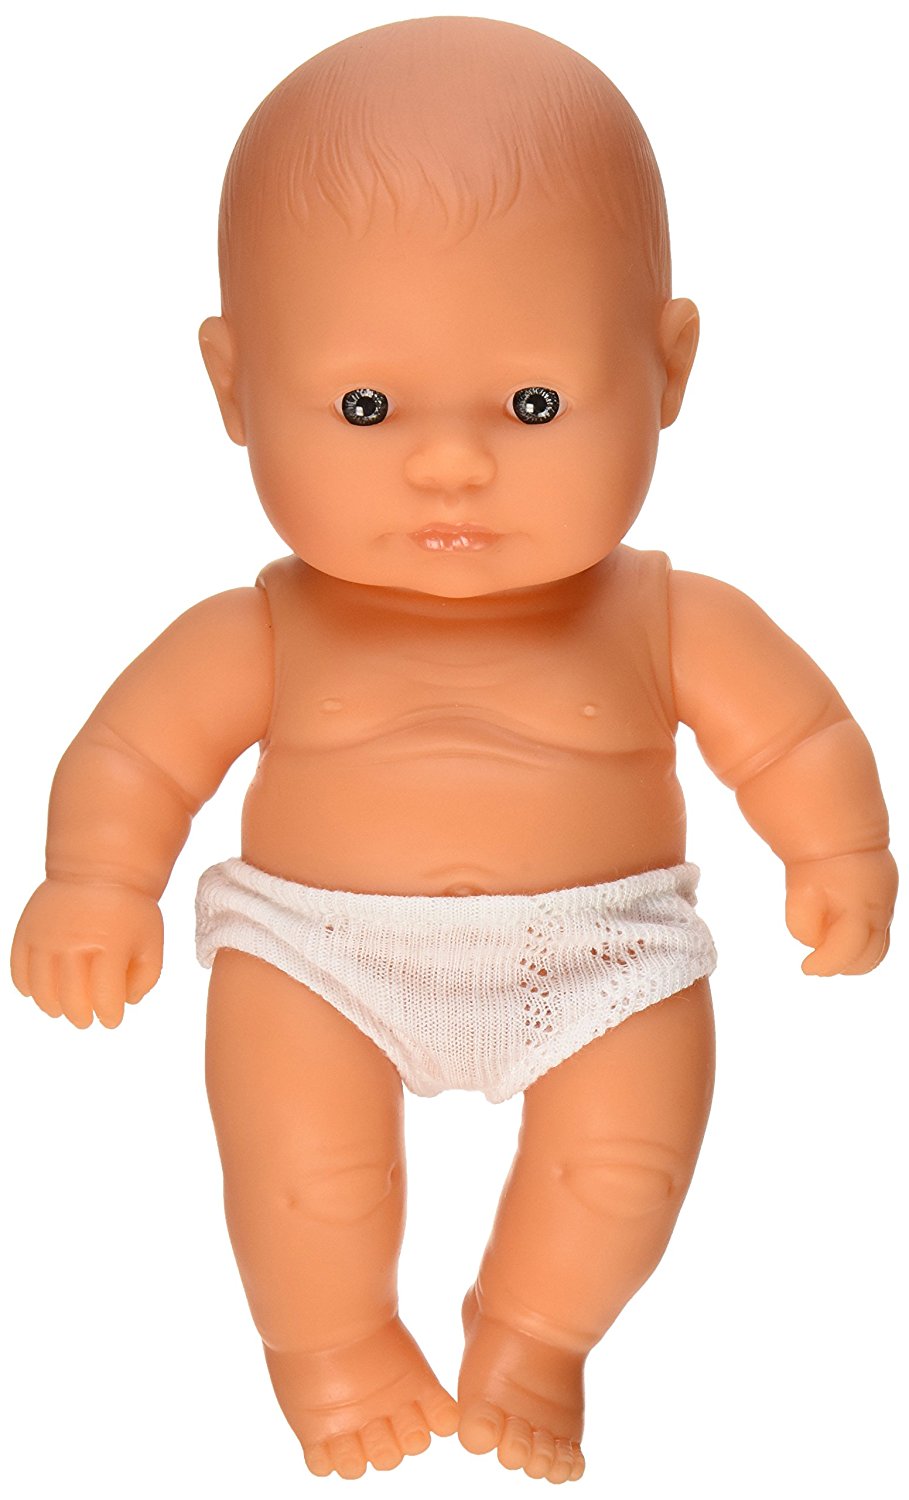 Mle31031 Newborn Baby Doll White Boy 12-5/8l